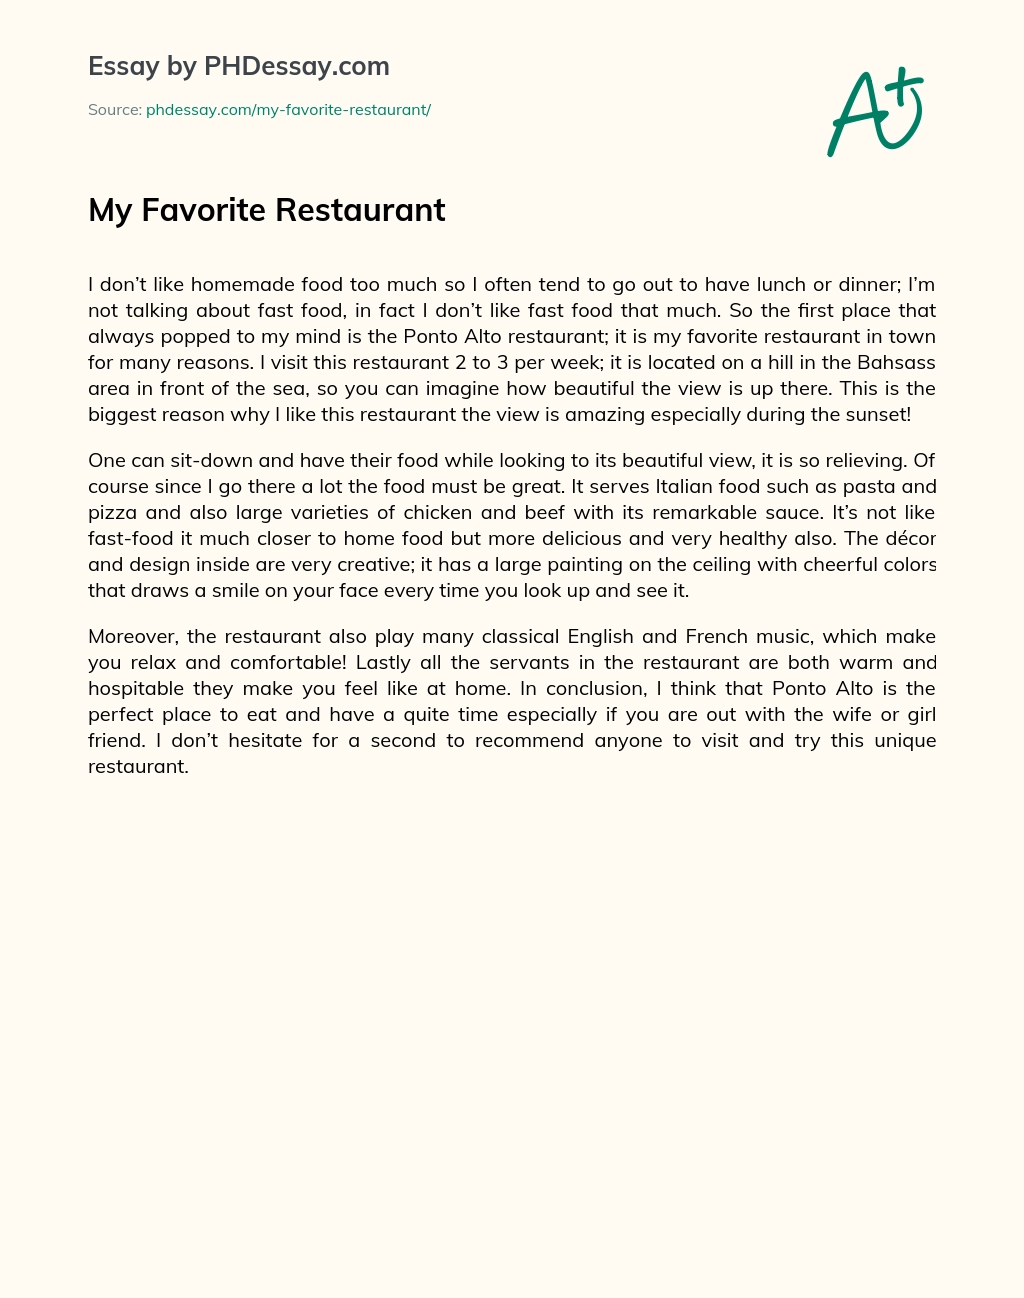 descriptive essay on favorite restaurant